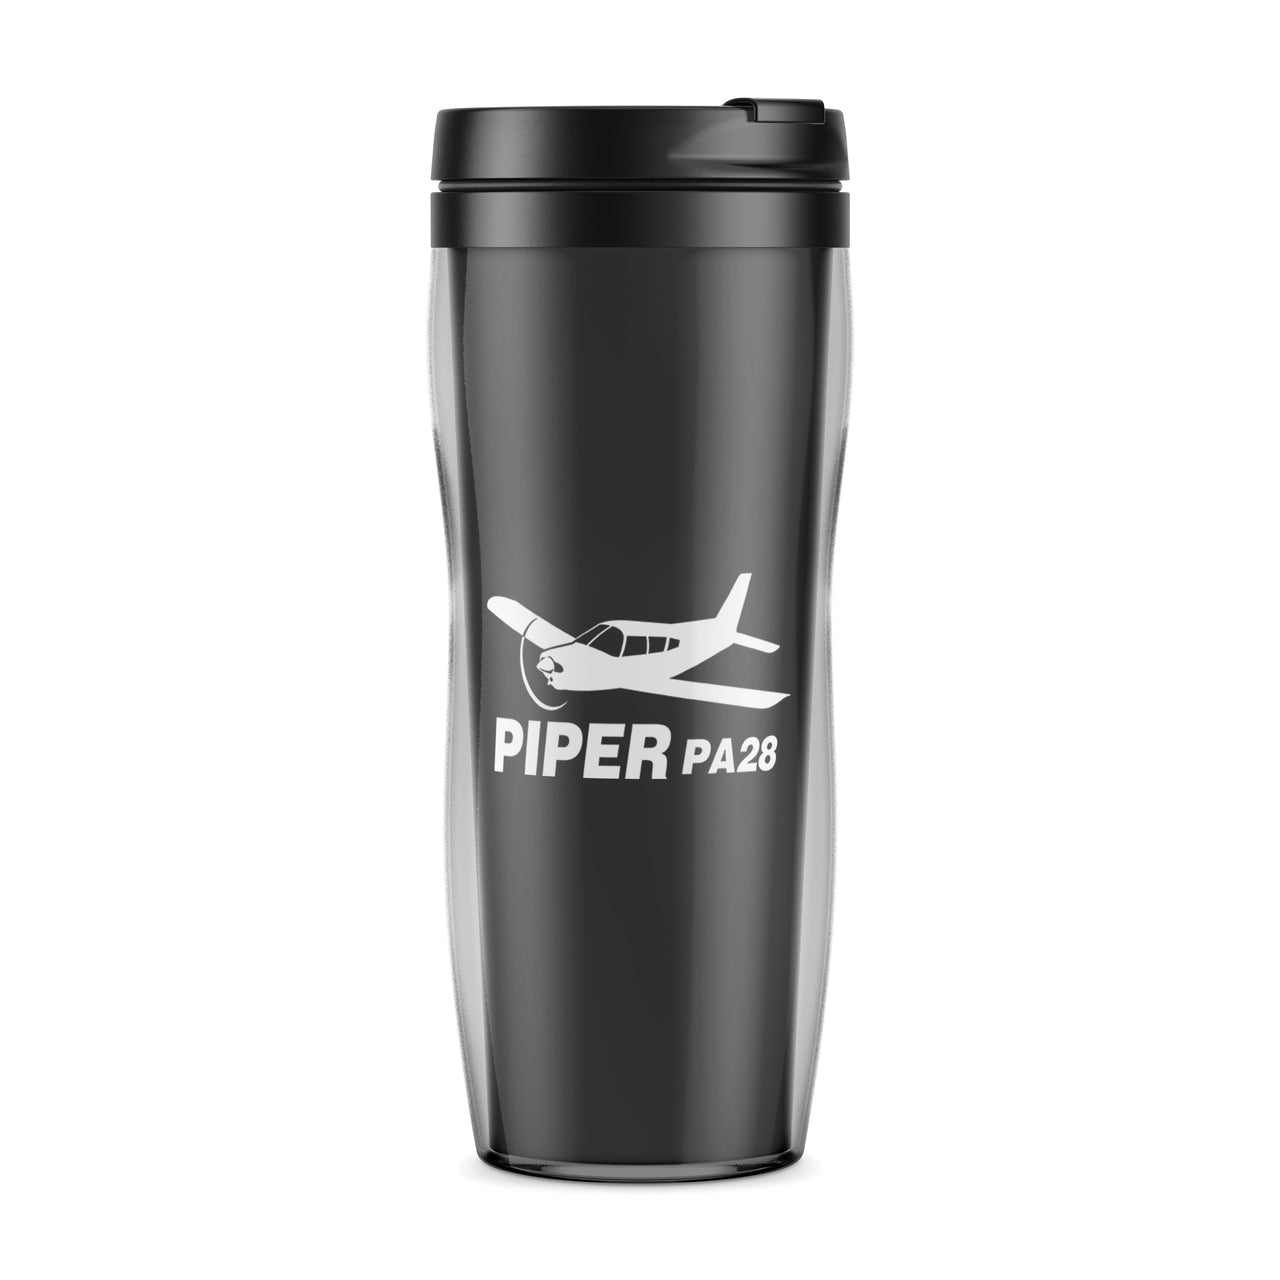 The Piper PA28 Designed Travel Mugs